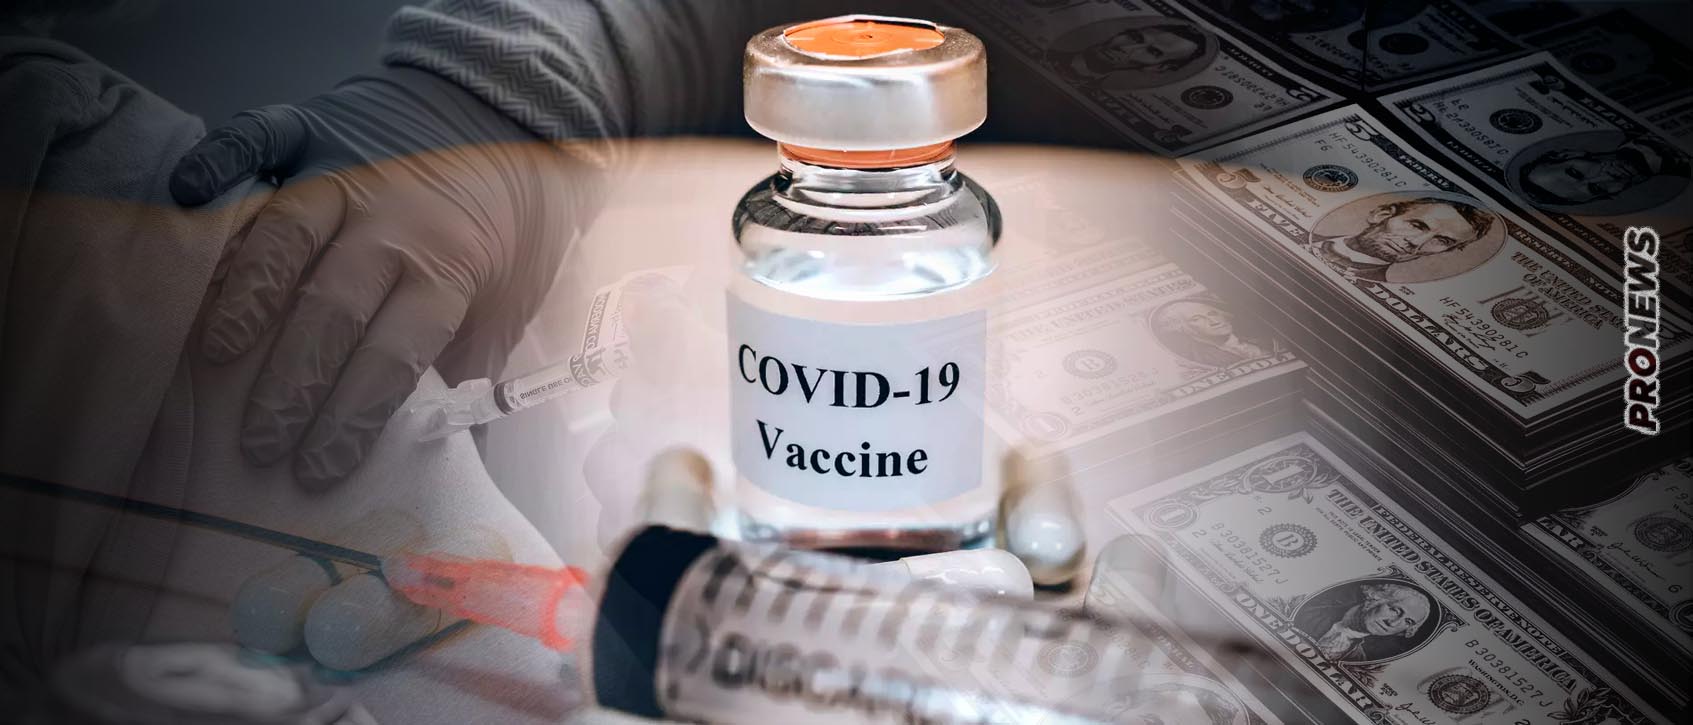 Aμερικανός Γερουσιαστής: «Επίτηδες σαμποτάρισαν την θεραπεία για τον Covid-19 για να δοθεί επείγουσα άδεια για τα εμβόλια»!